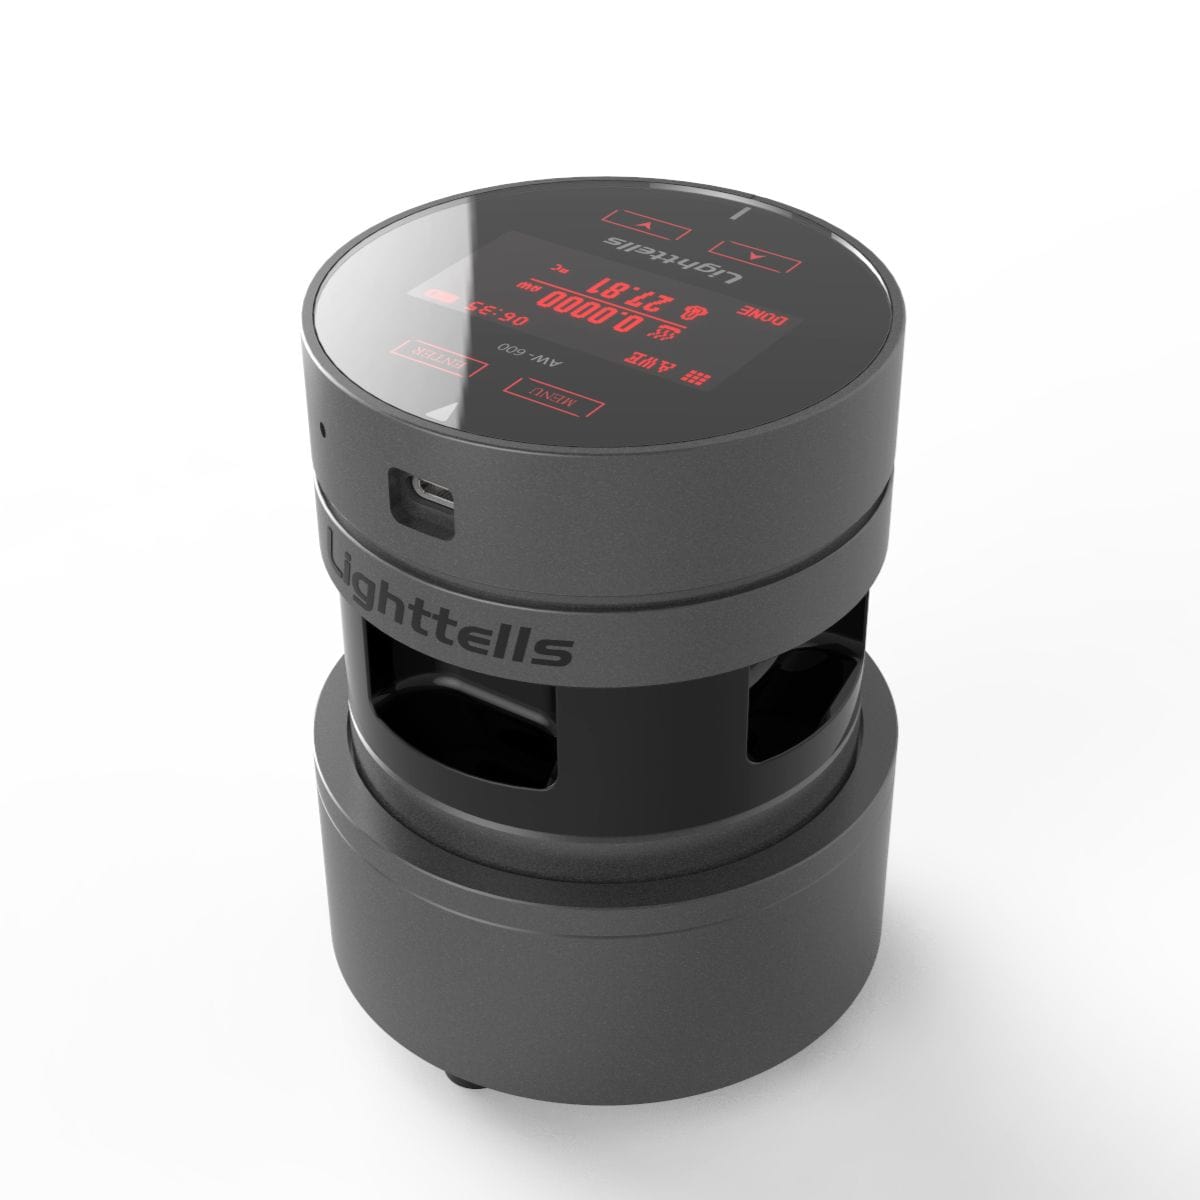 Lighttells Lighttells AW-600 Water Activity Analyzer Coffee Analyzers